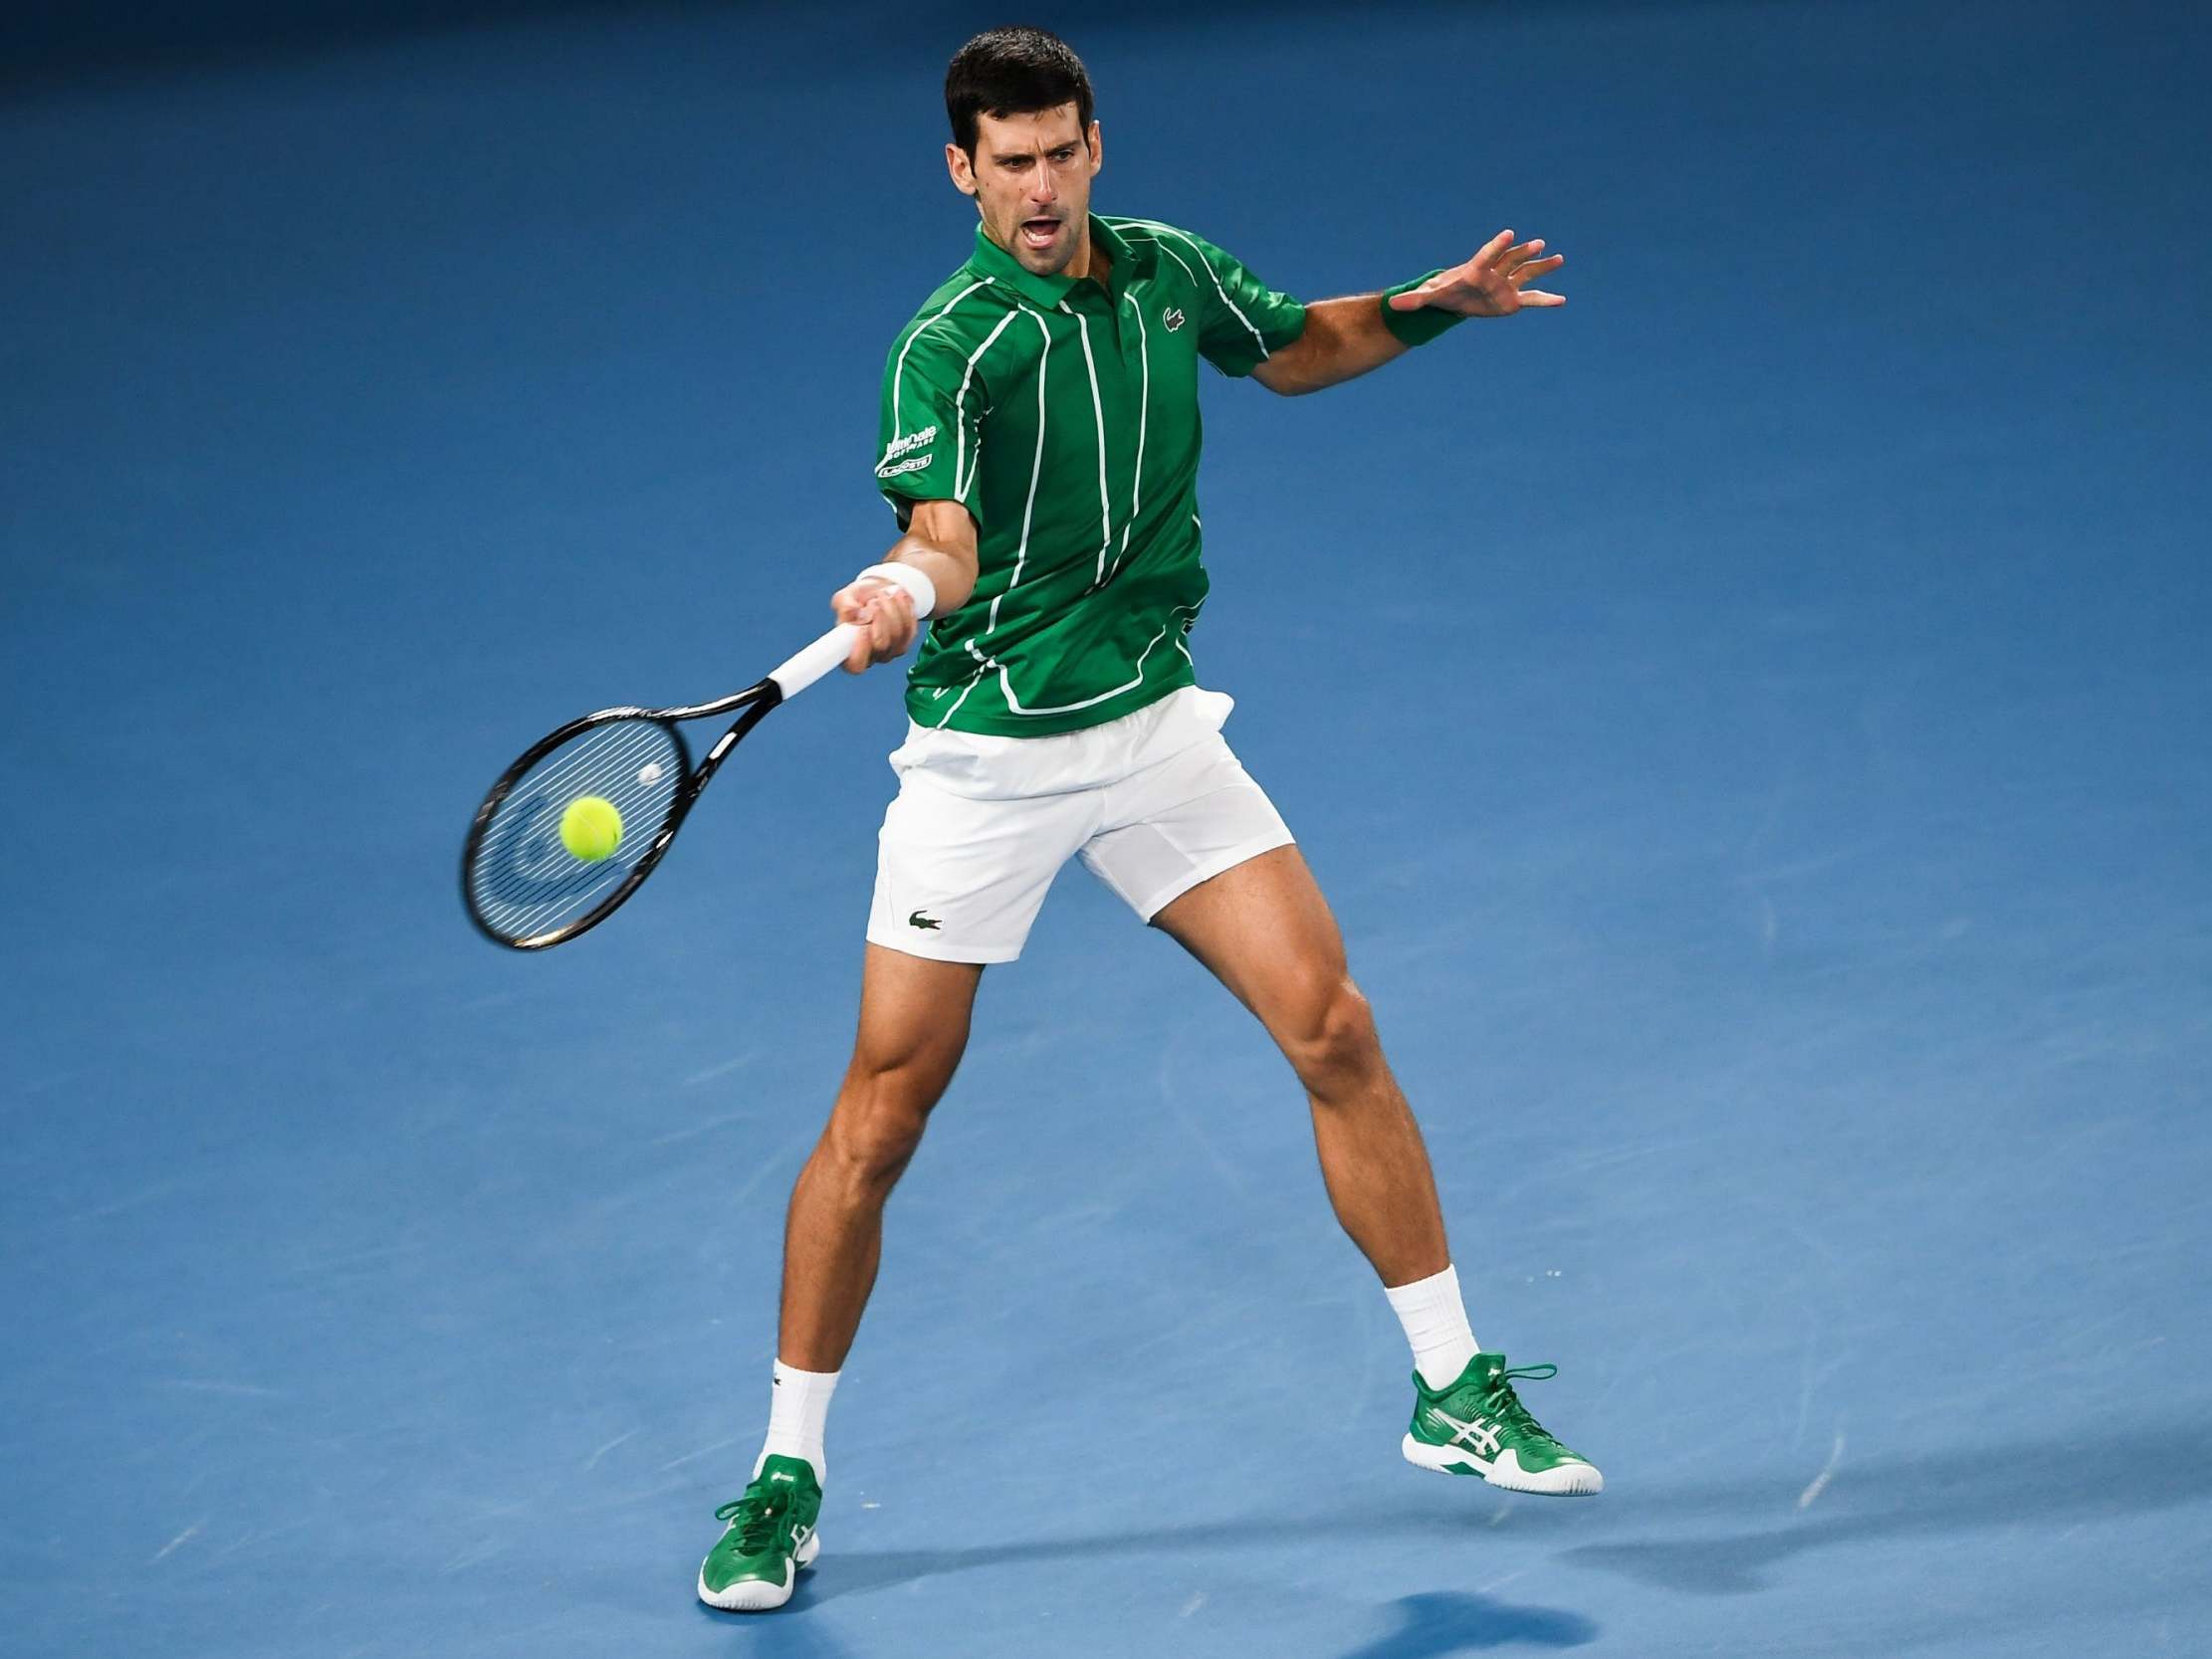 Novak Djokovic en route to winning a 17th Grand Slam title